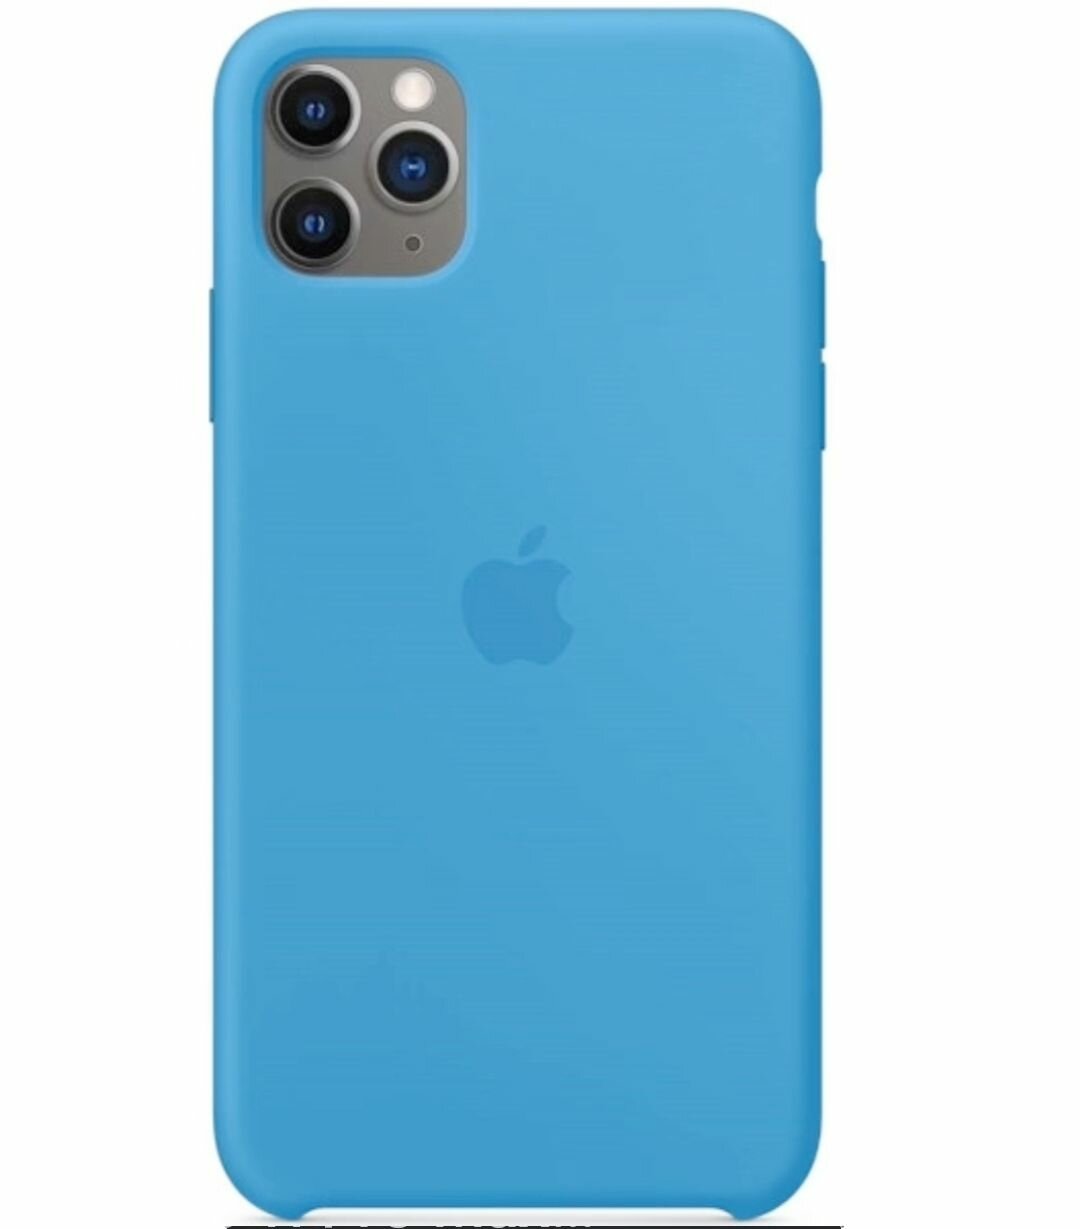 IPhone 11 pro MAX голубой силиконовый чехол Silicone case для айфон 11 про макс